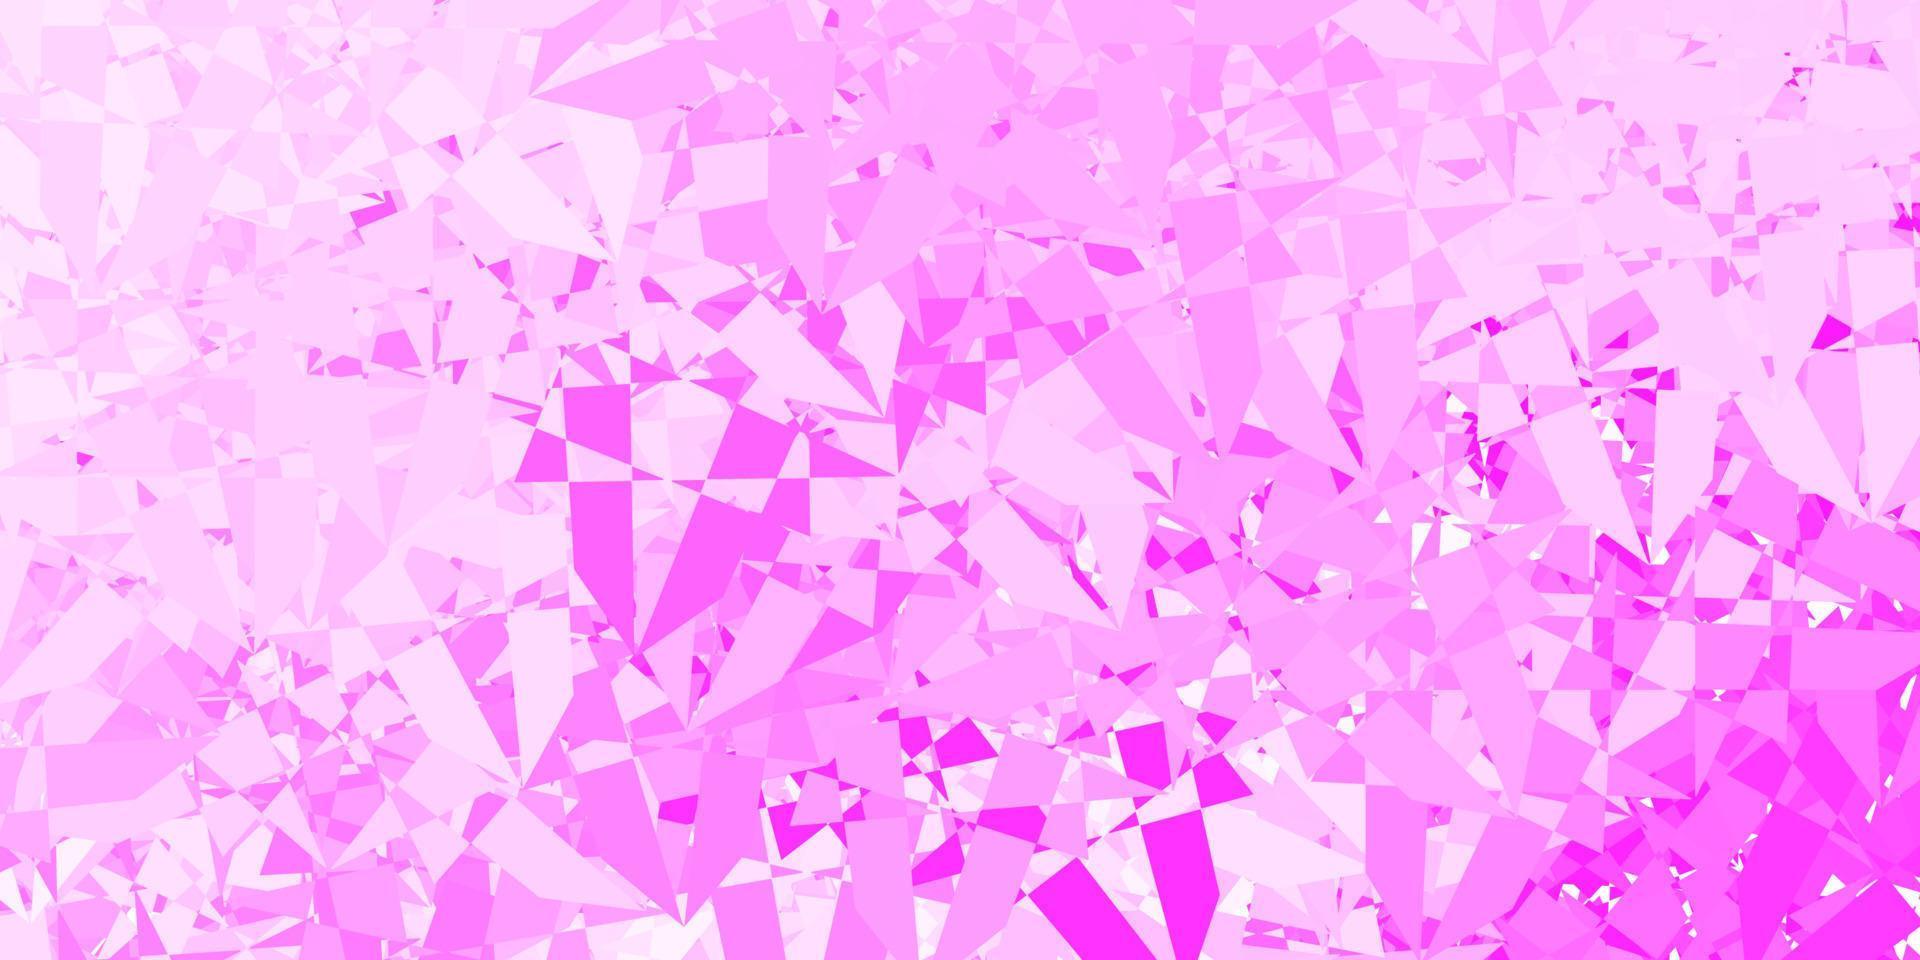 sfondo vettoriale viola chiaro con forme poligonali.